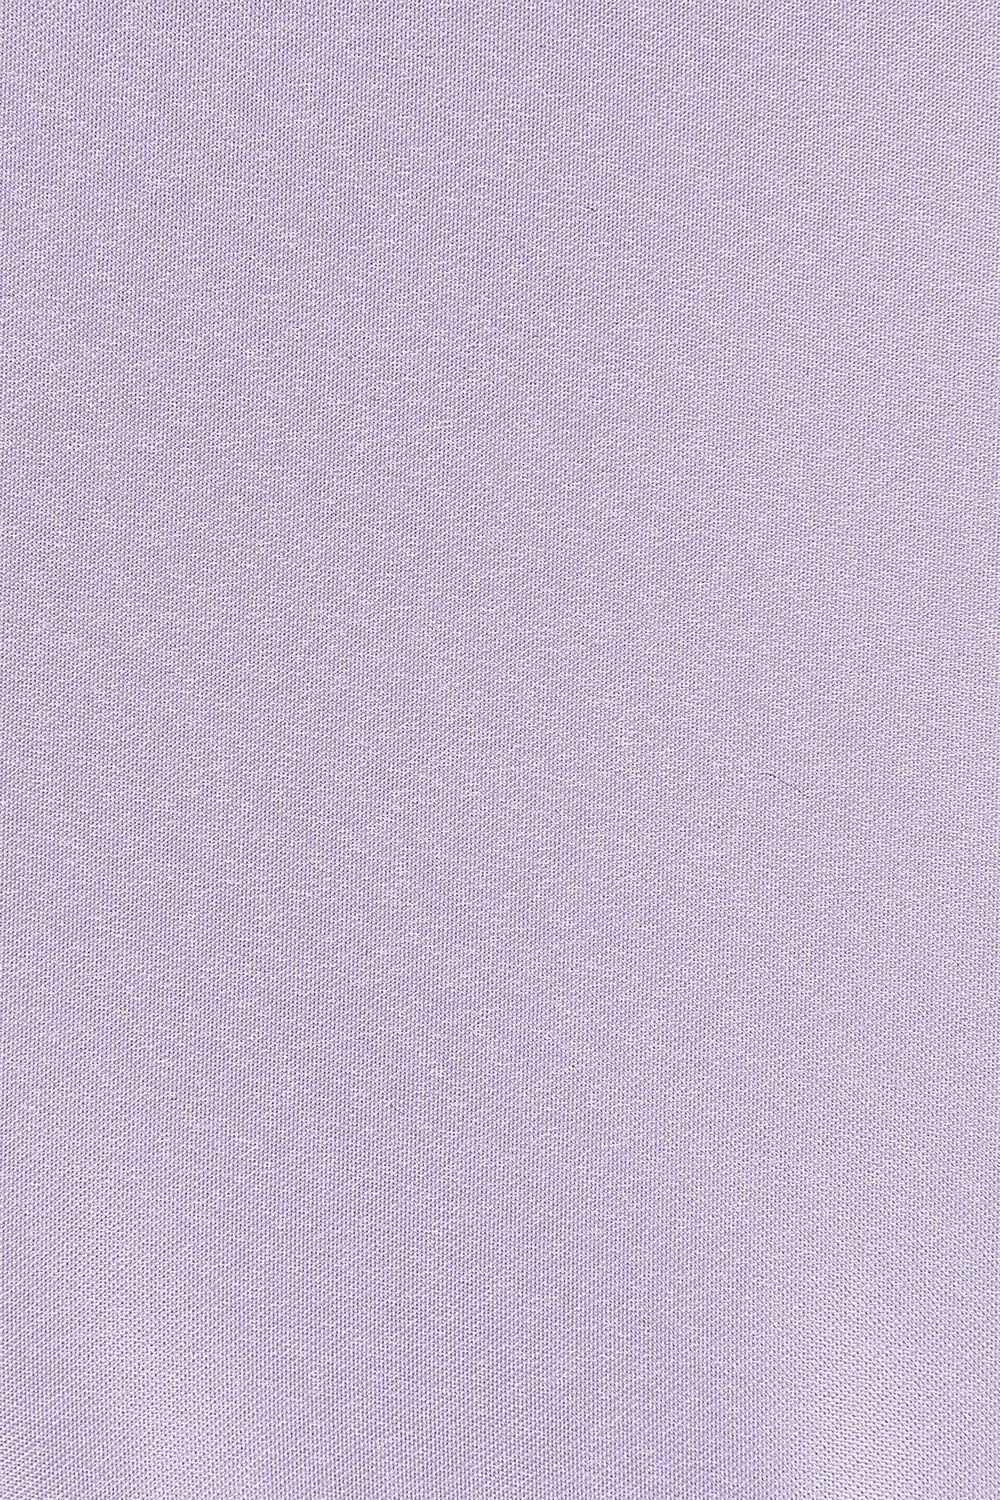 Plain Pastel lilac satin swatch card